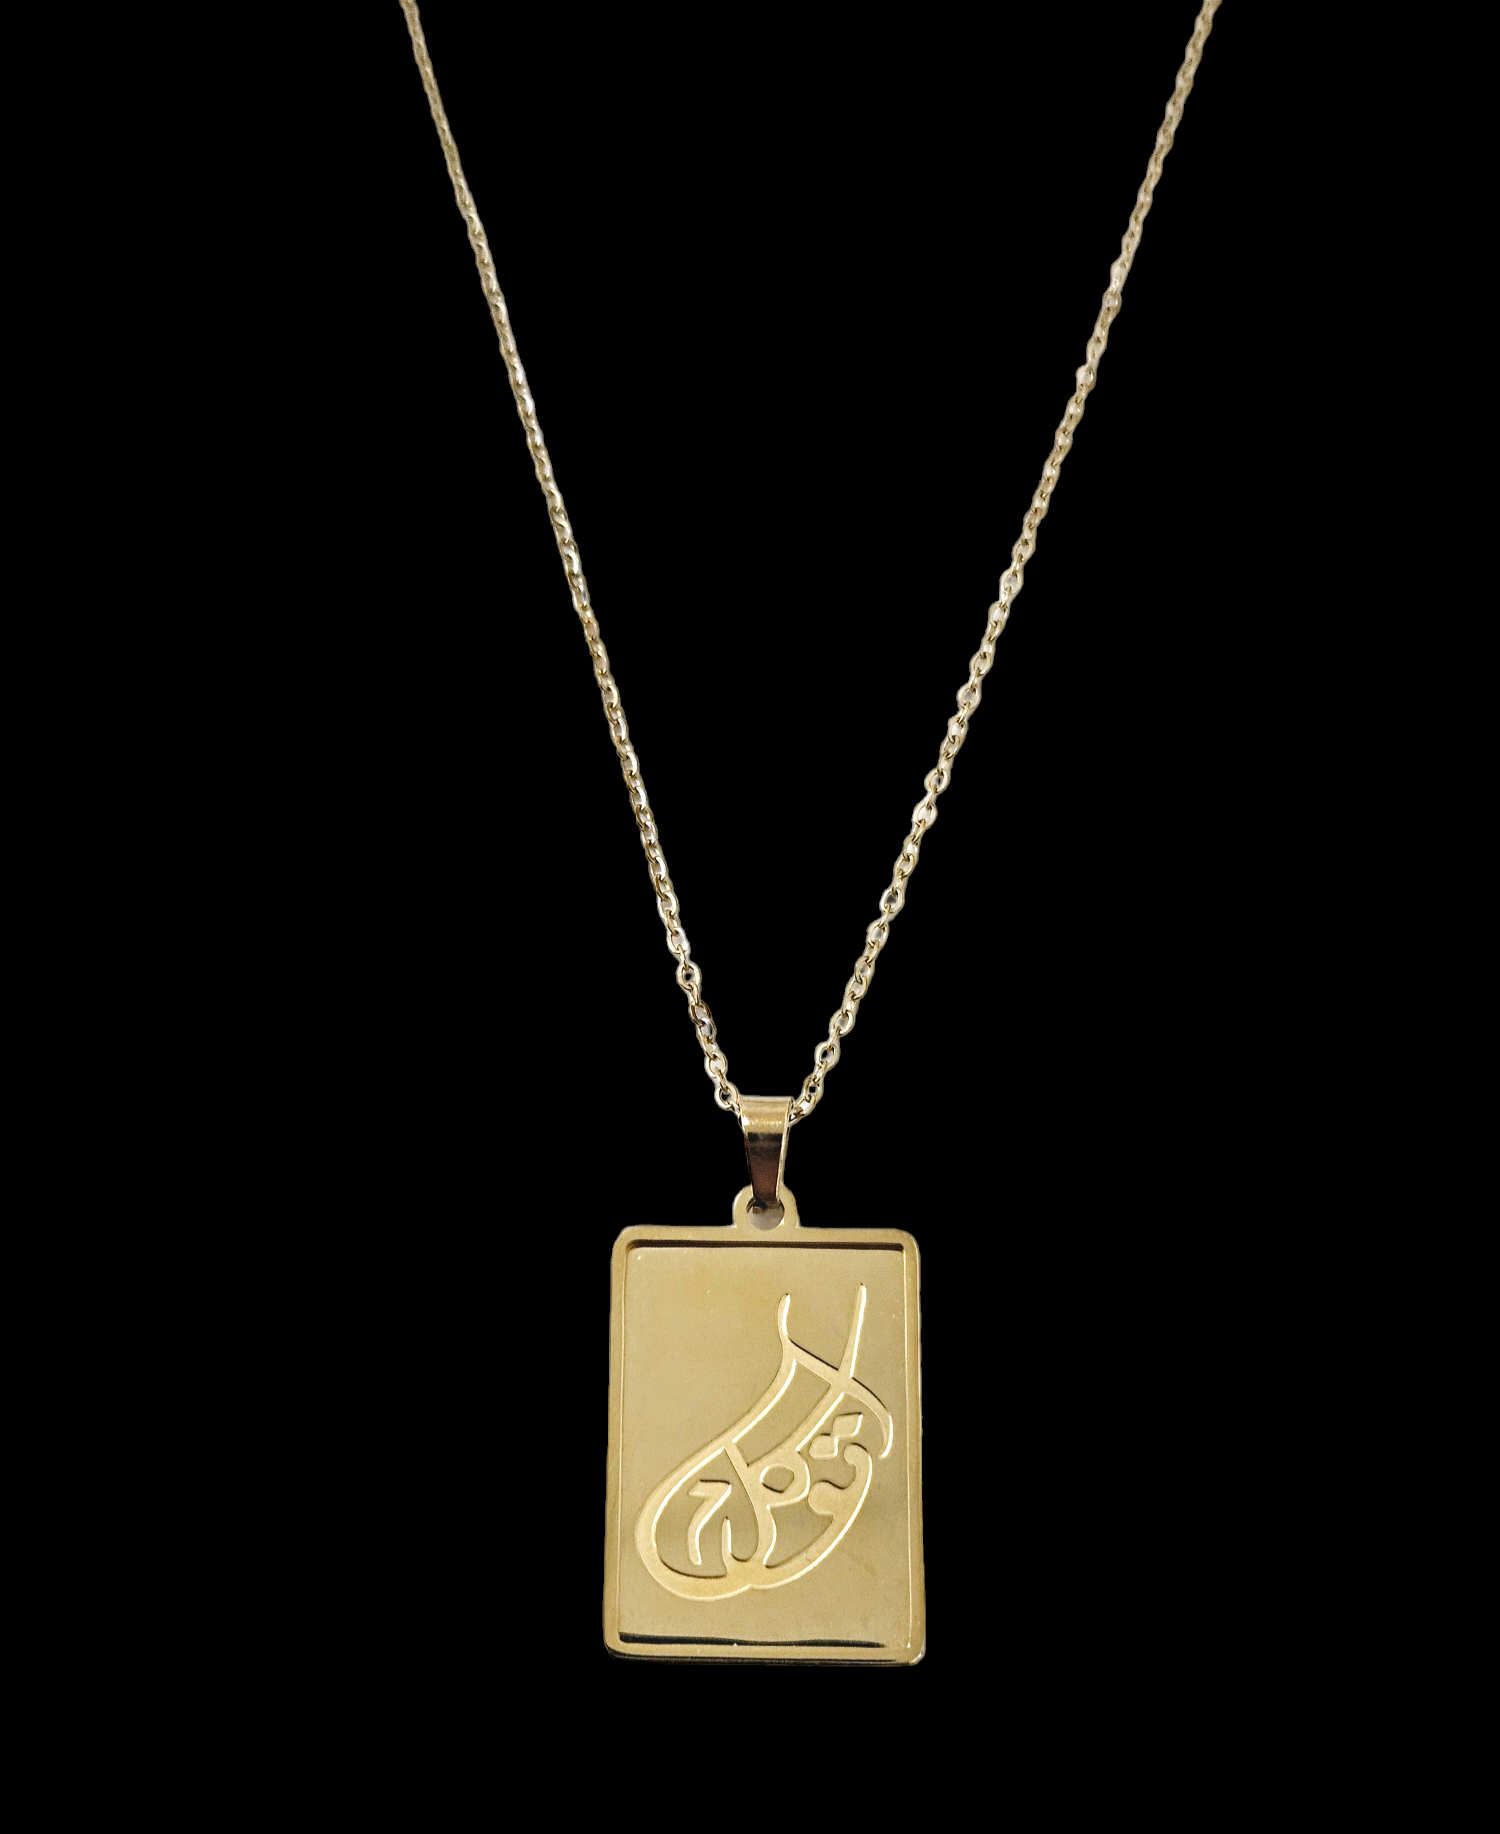 Tawakkul (Trust) Necklace - Habibi Heritage